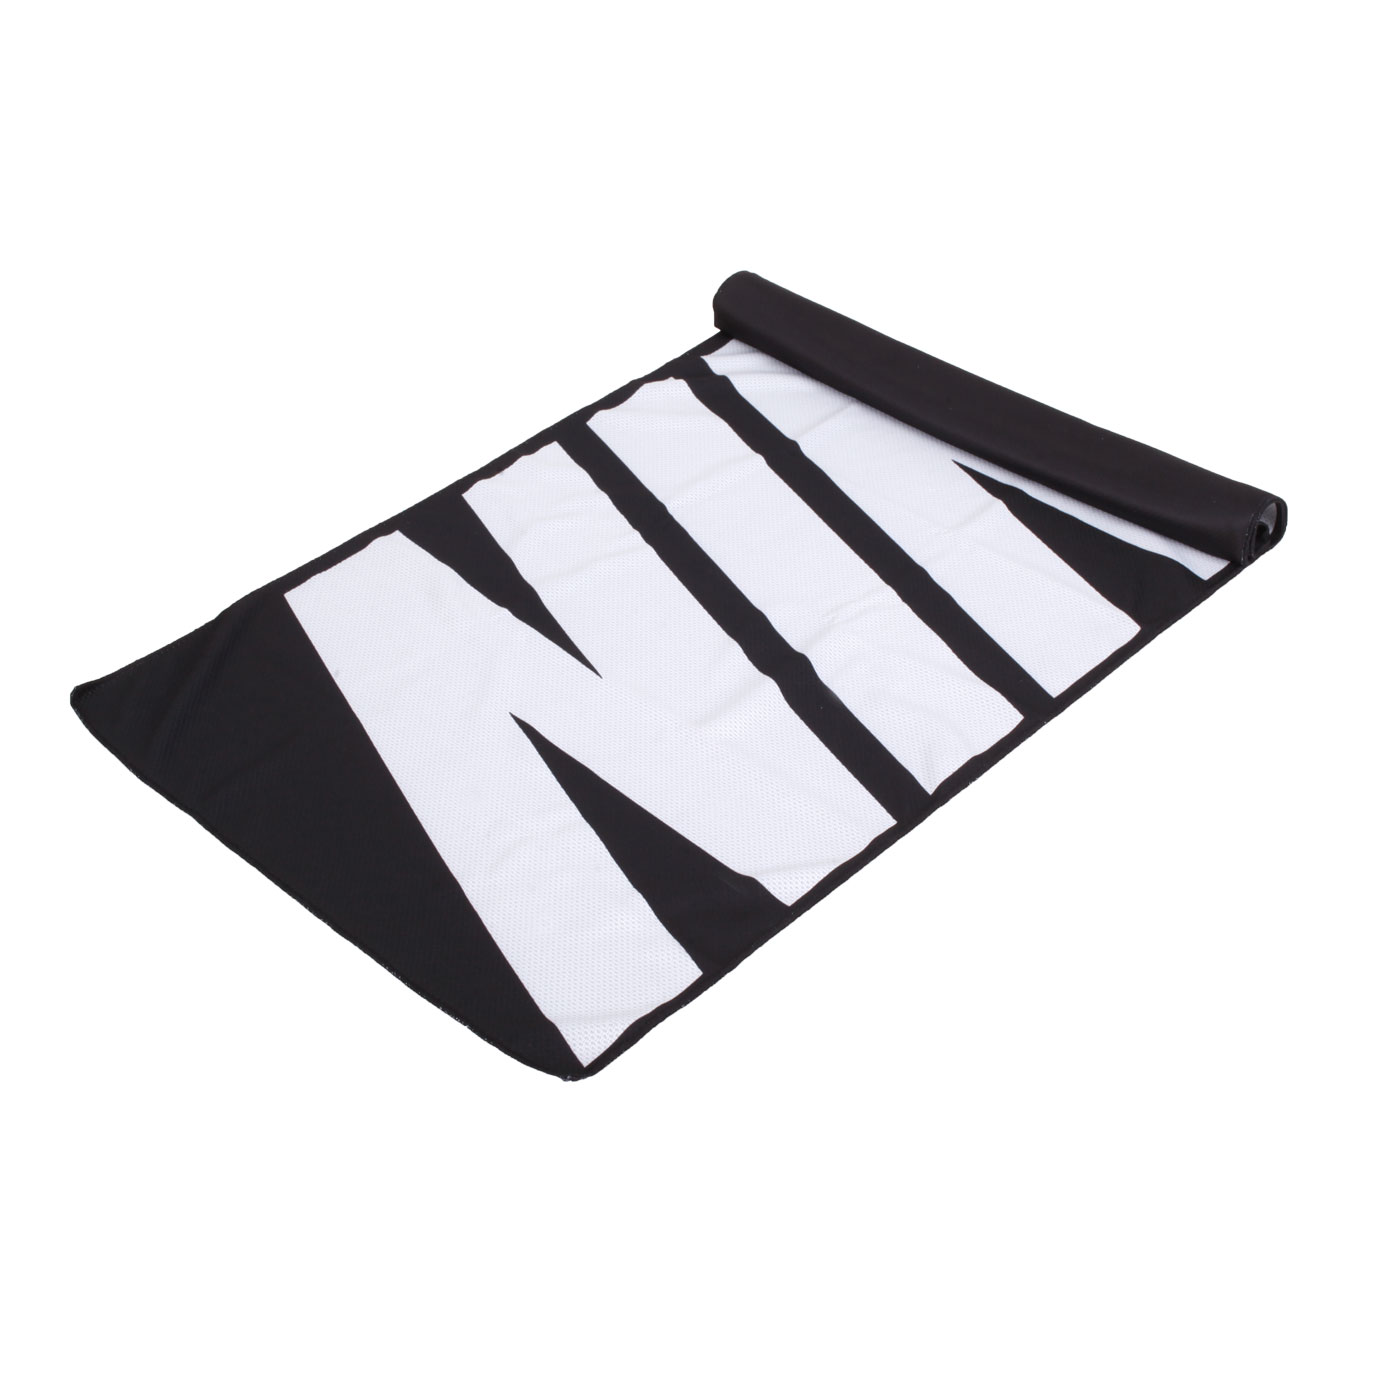 NIKE COOLING TOWEL MEDIUM 毛巾(75x35cm)  N1007587010NS - 黑白